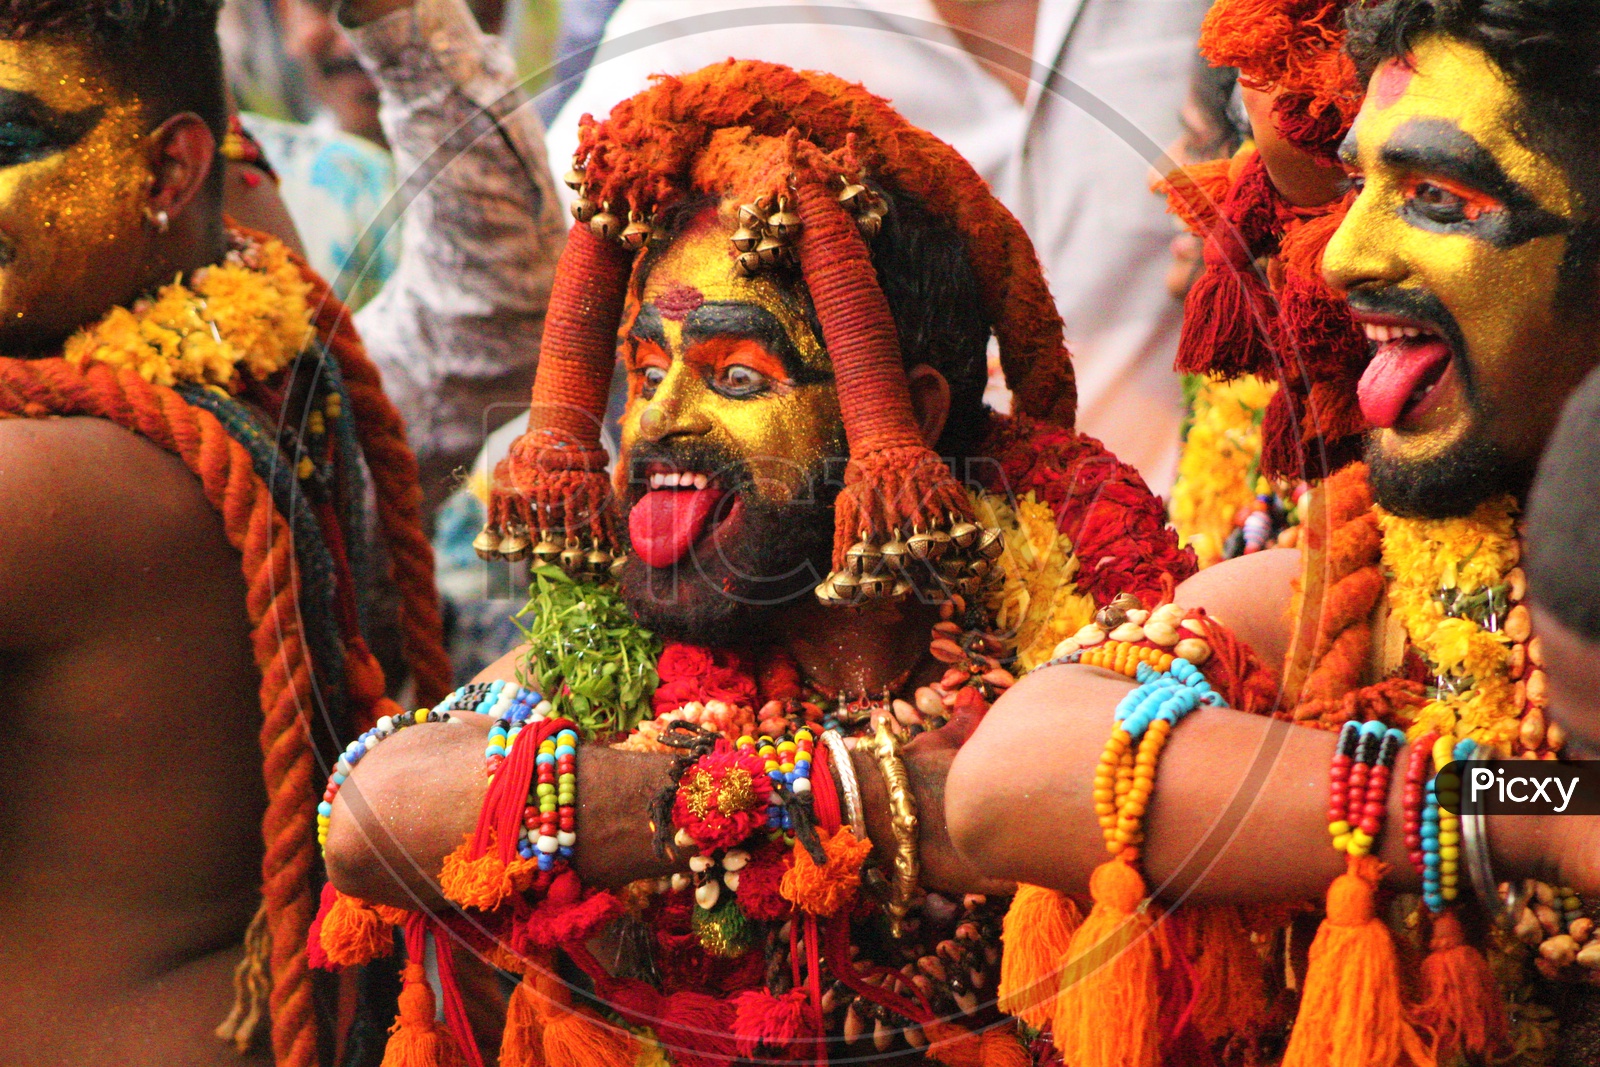 Portrait Of Pothu Raju During Bonalu Celebrations in Hyderabad